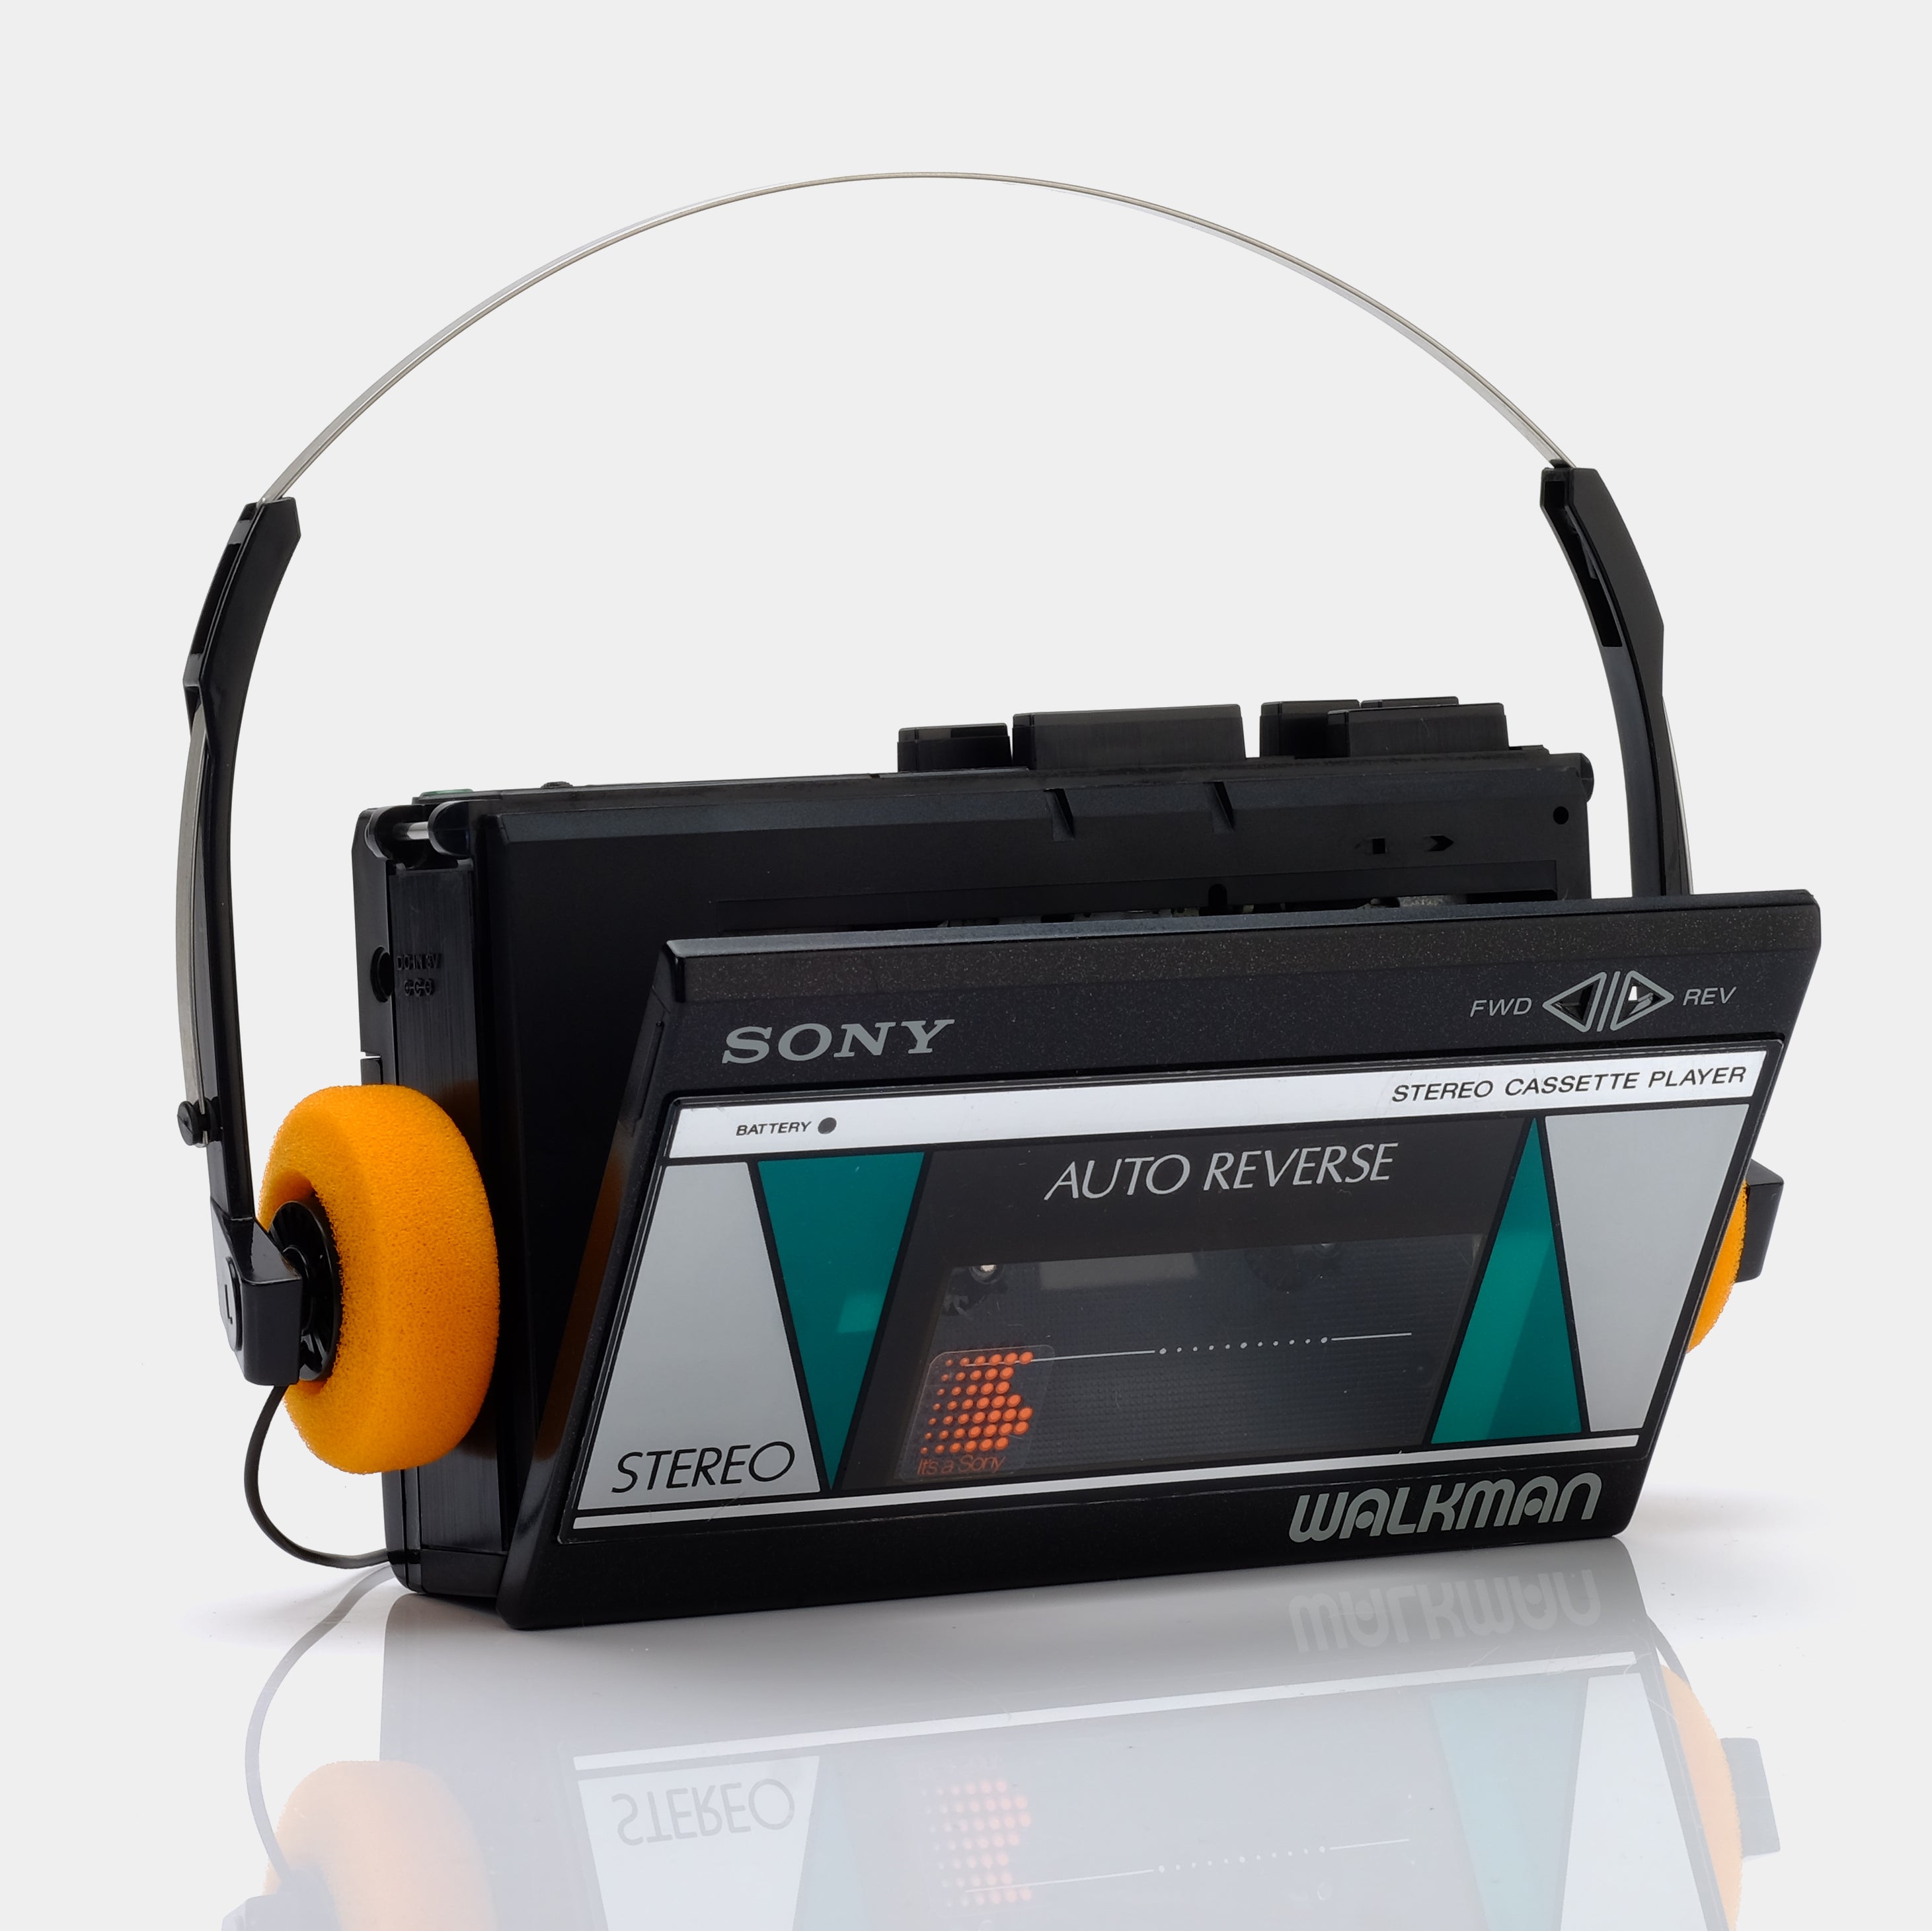 Sony Walkman WM-18 Portable Cassette Player